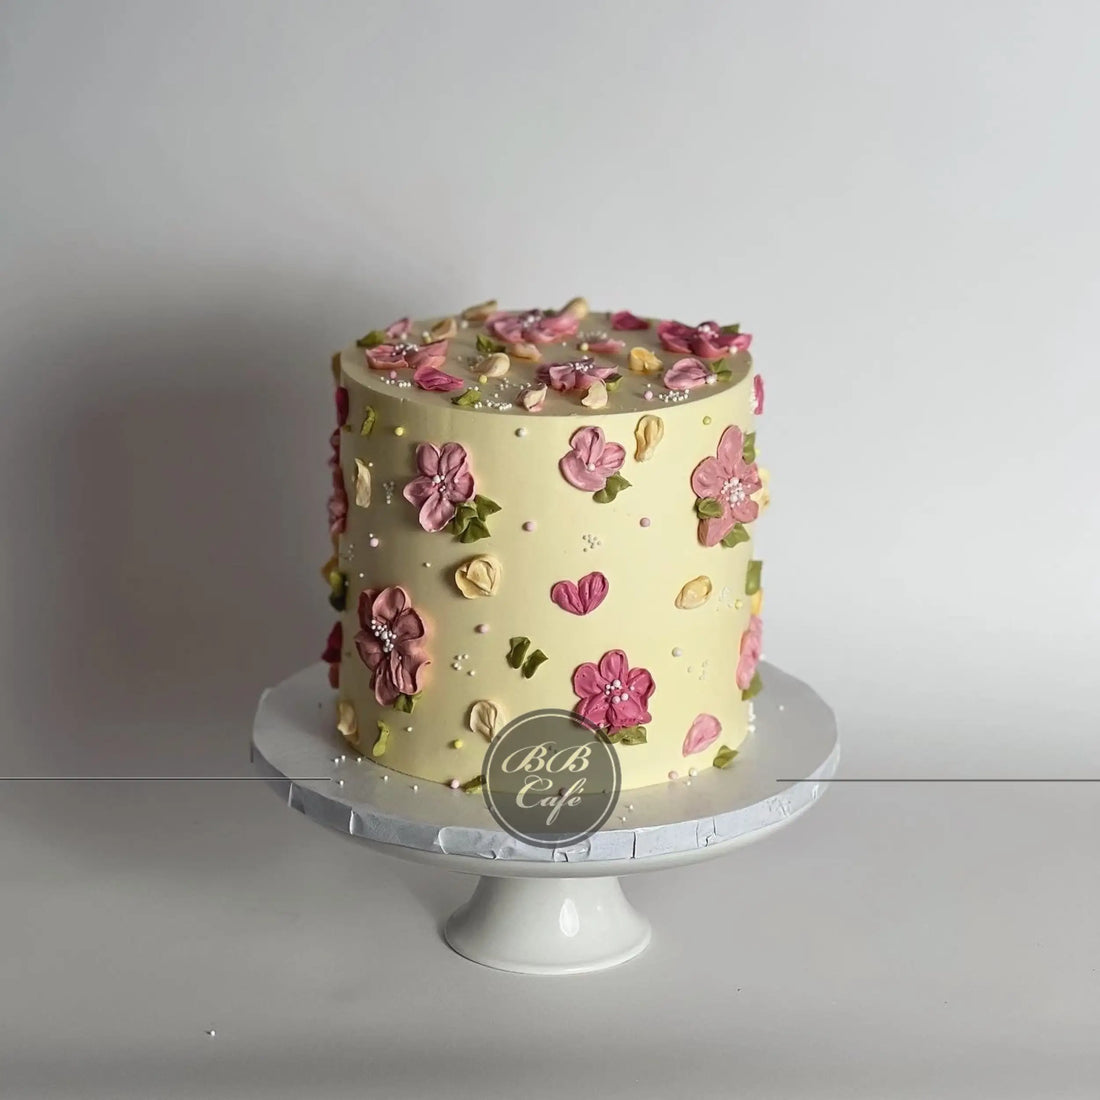 Hand piped flowers on buttercream - custom cake